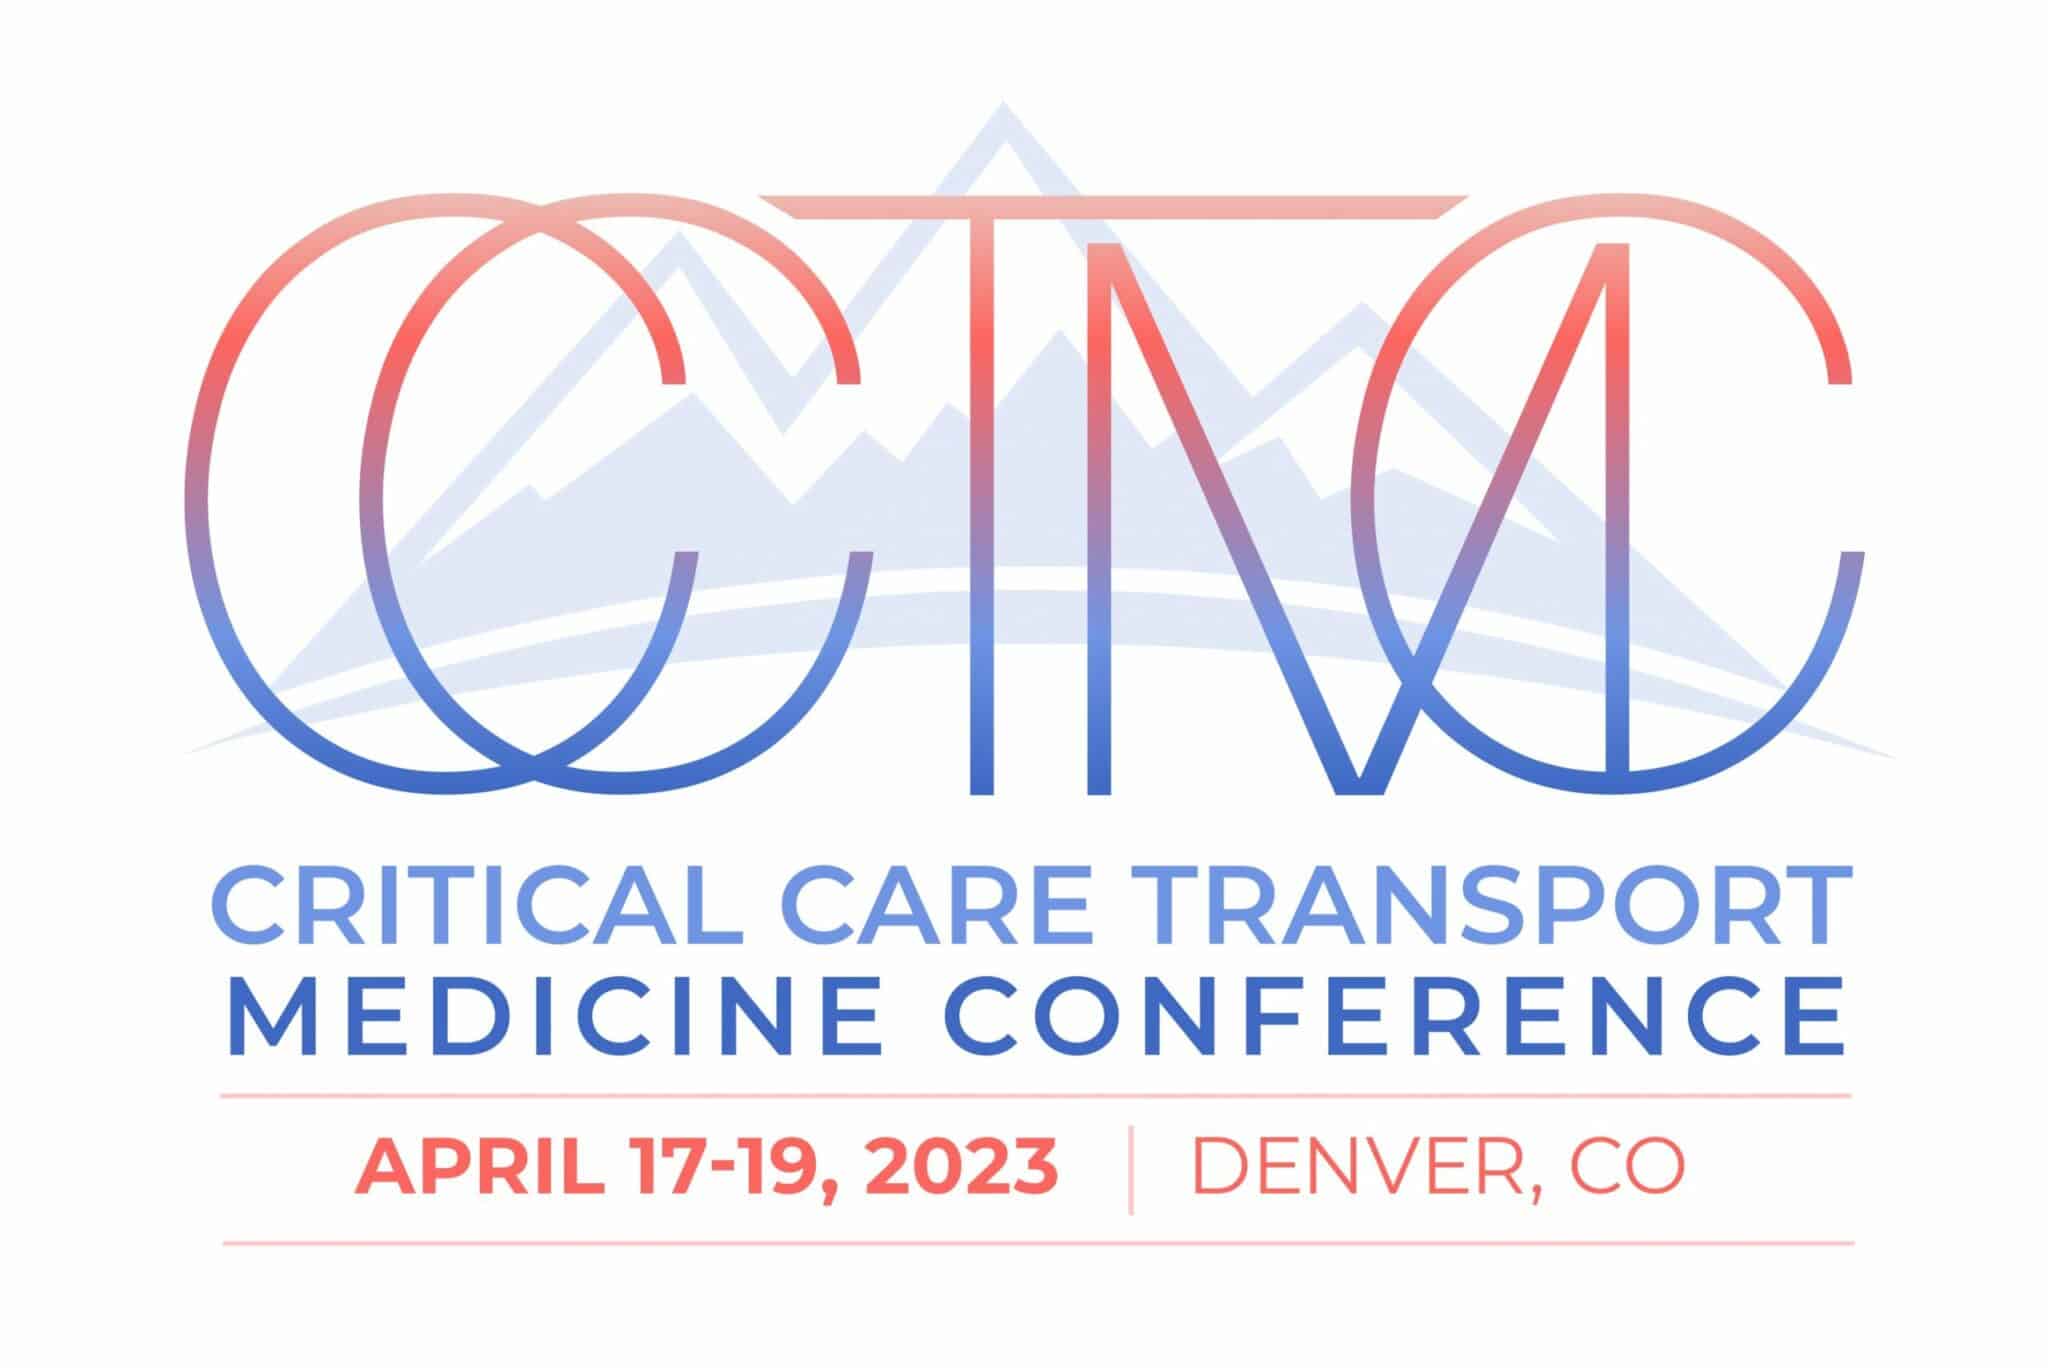 Critical Care Transport Medicine Conference